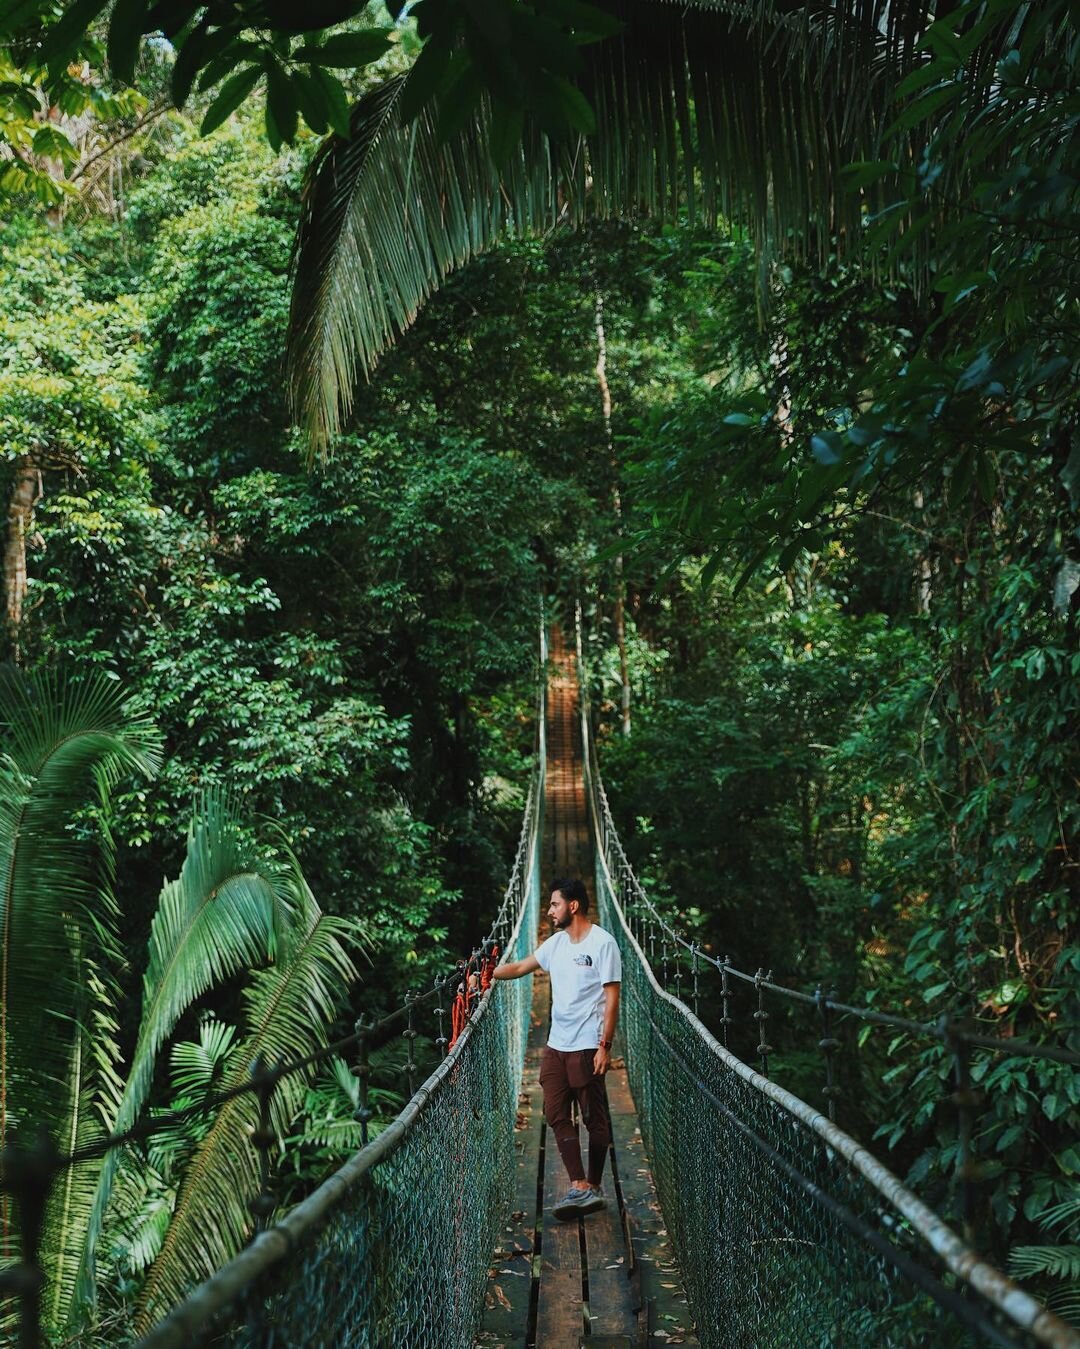 &quot;Swinging into adventure at Bocawina Rainforest Resort! 🌳🌲 The suspension bridge is just the beginning - wait until you soar across the canopy on the zipline! 🌈🦜
.
Photo @ burak7_3 on Instagram
.
.
 #BocawinaBliss #RainforestThrills #Suspens